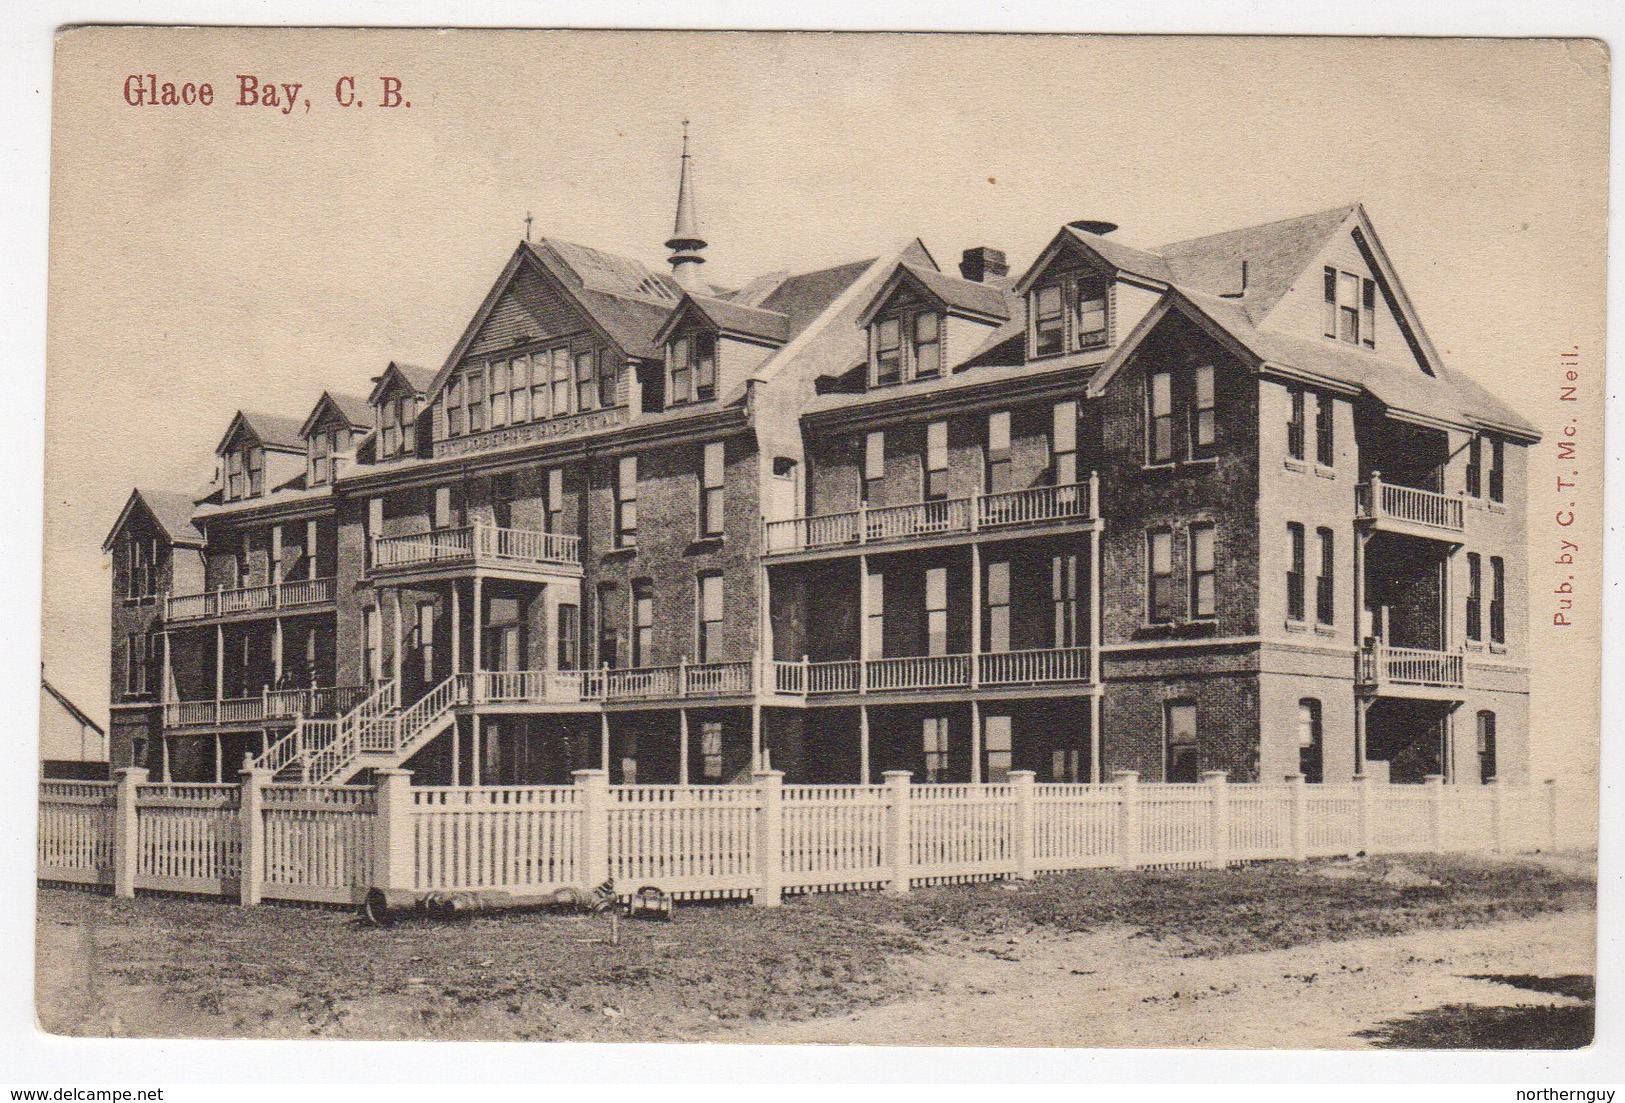 GLACE BAY, Cape Breton, Nova Scotia, Canada, St. Joseph's Hospital. Pre-1920 McNeil Postcard - Cape Breton